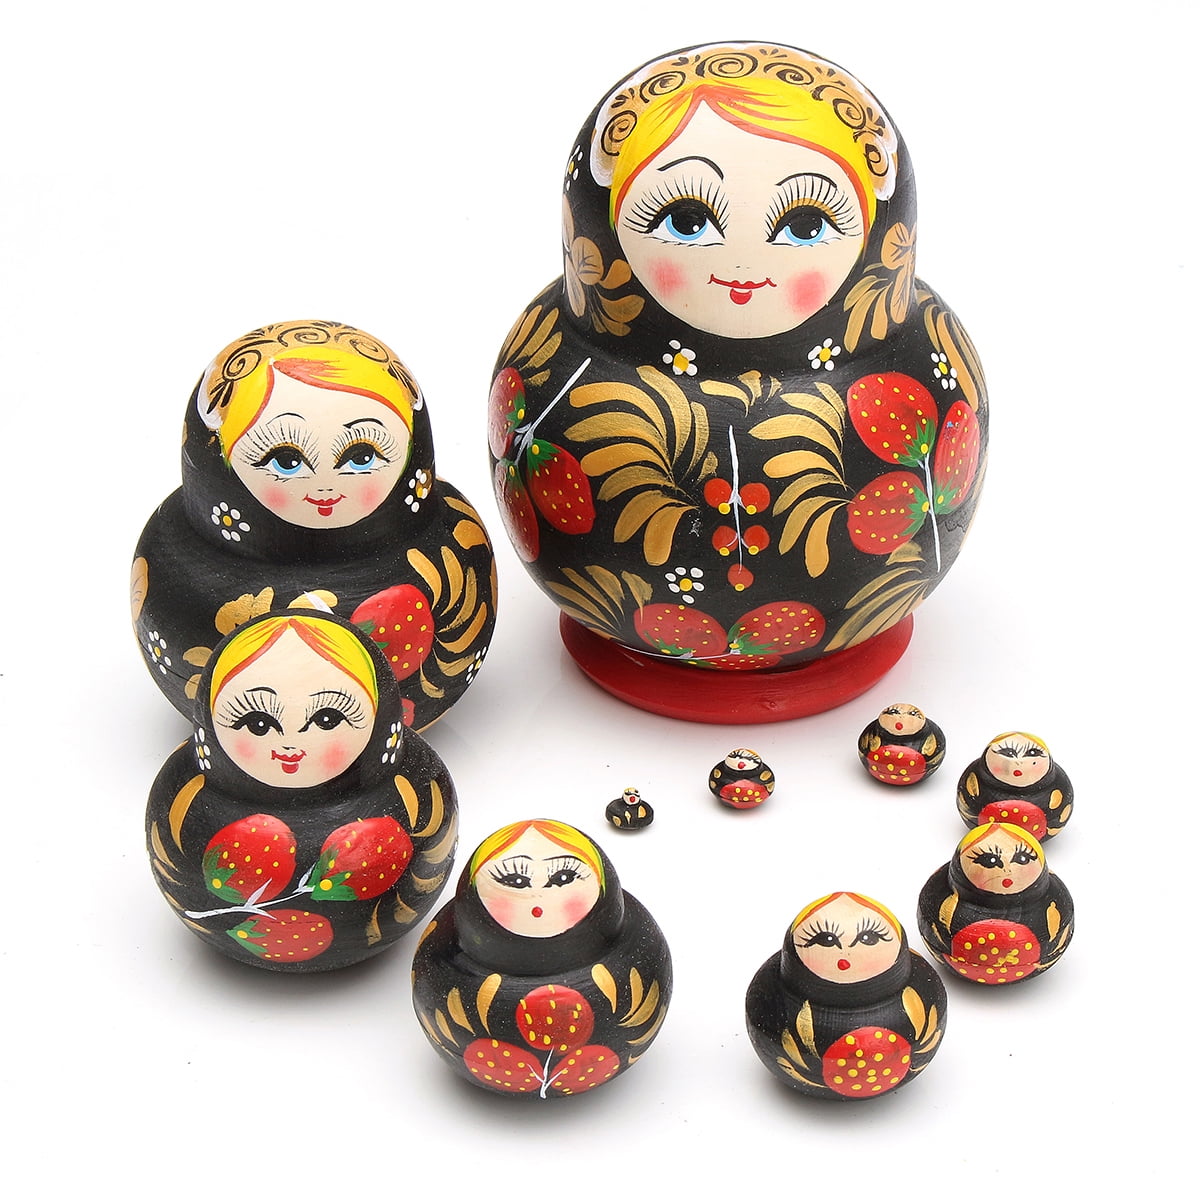 ULTNICE Wooden Russian Nesting Dolls Matryoshka Flower Stacking Toy Doll 10pcs